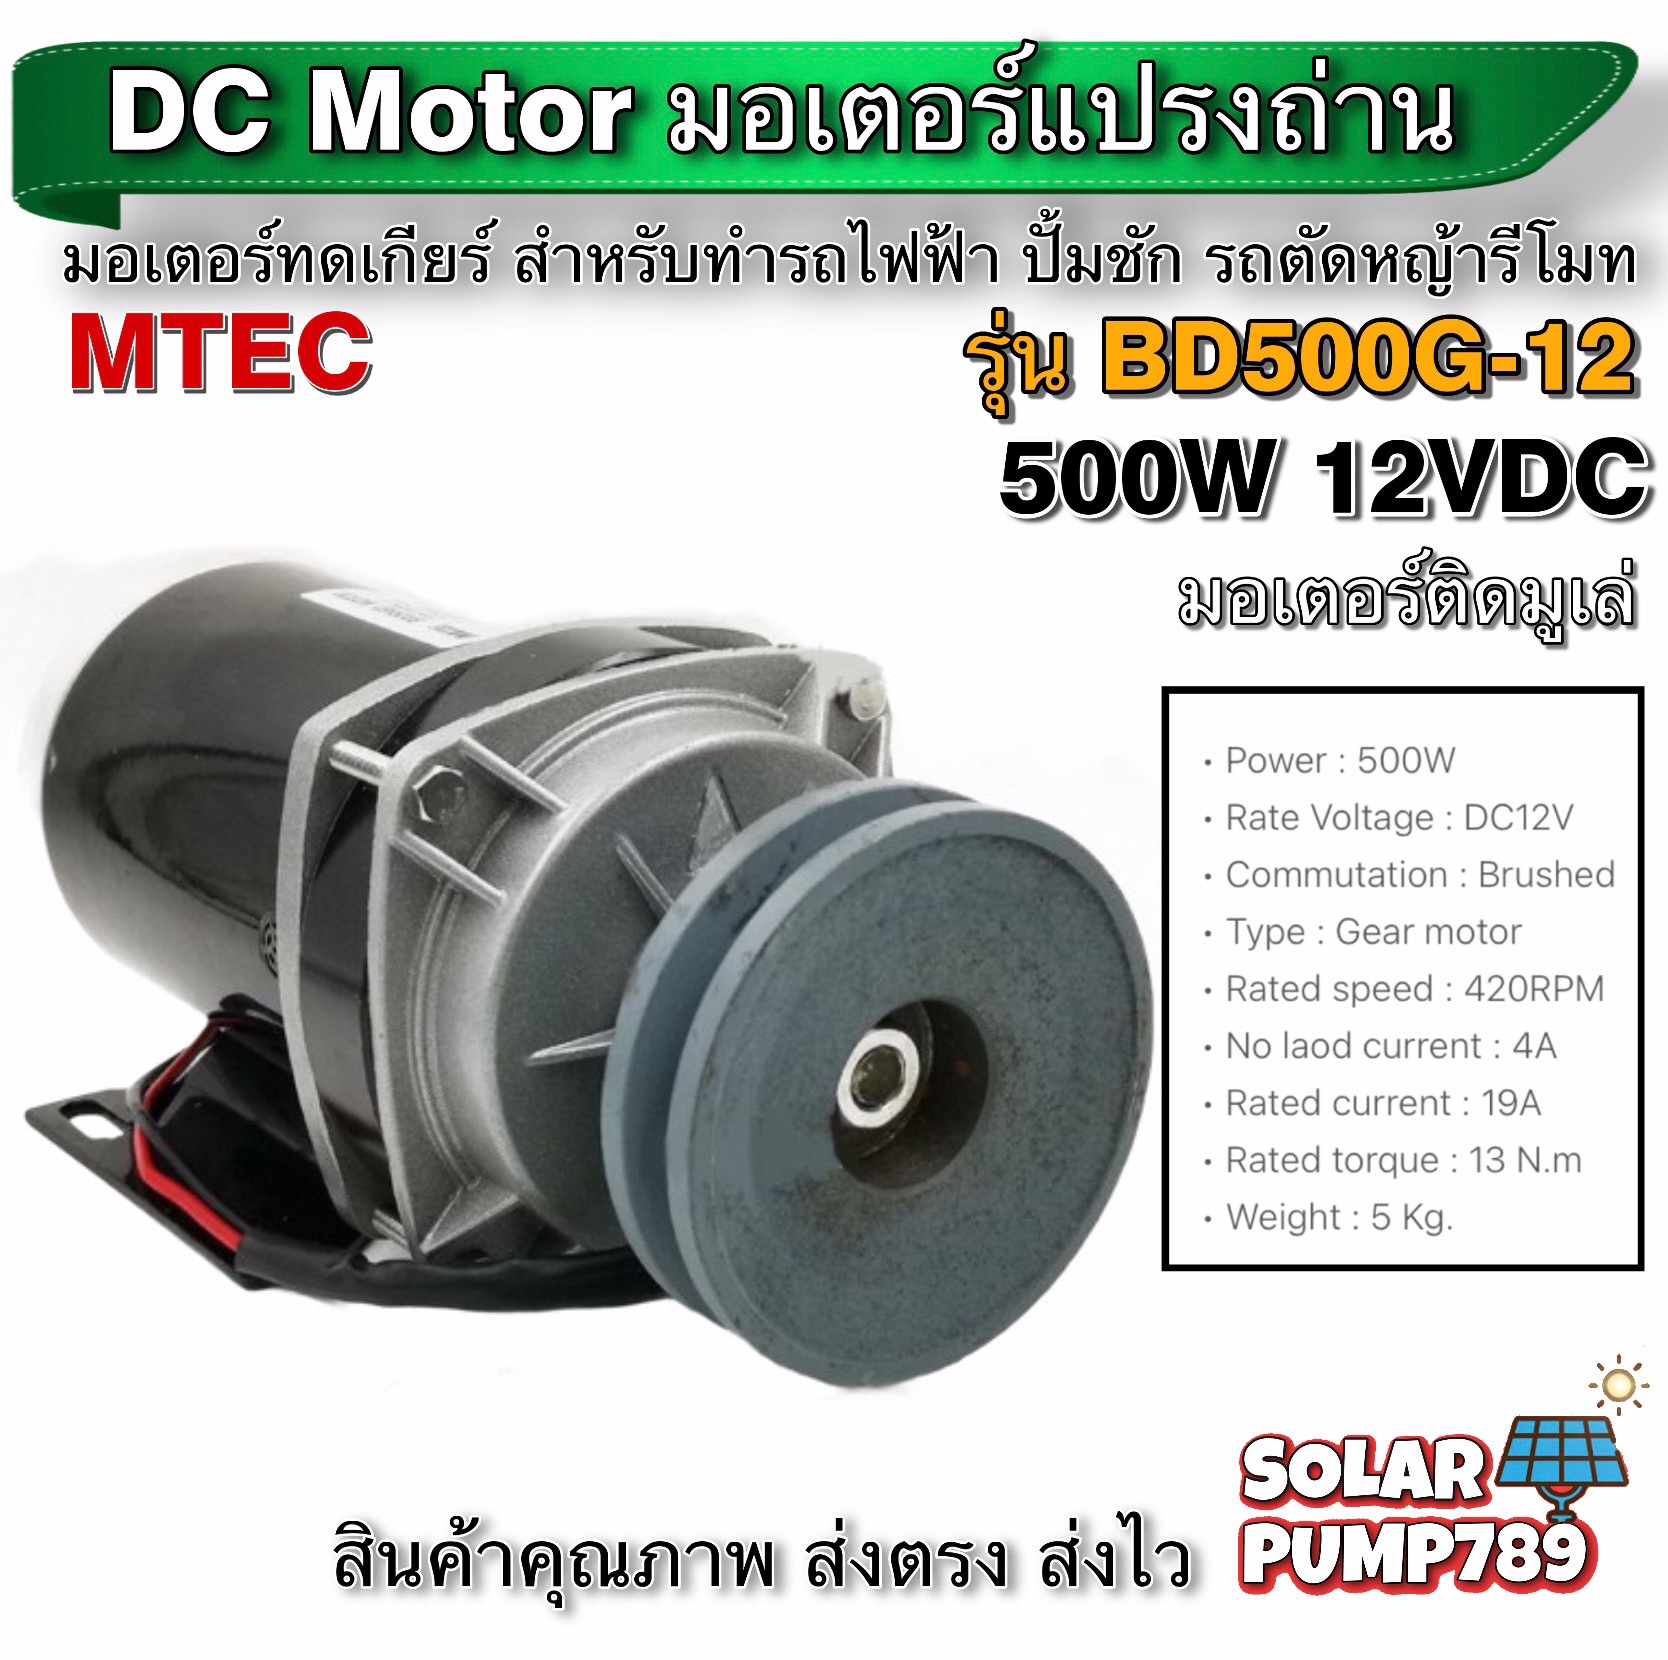 MTEC มอเตอร์ทดเกียร์ DC12V 500W 420RPM รุ่น BD500G-12 พร้อม มูเล่ - MTEC DC Brushed Motor With Gear (ราคาแนะนำ)